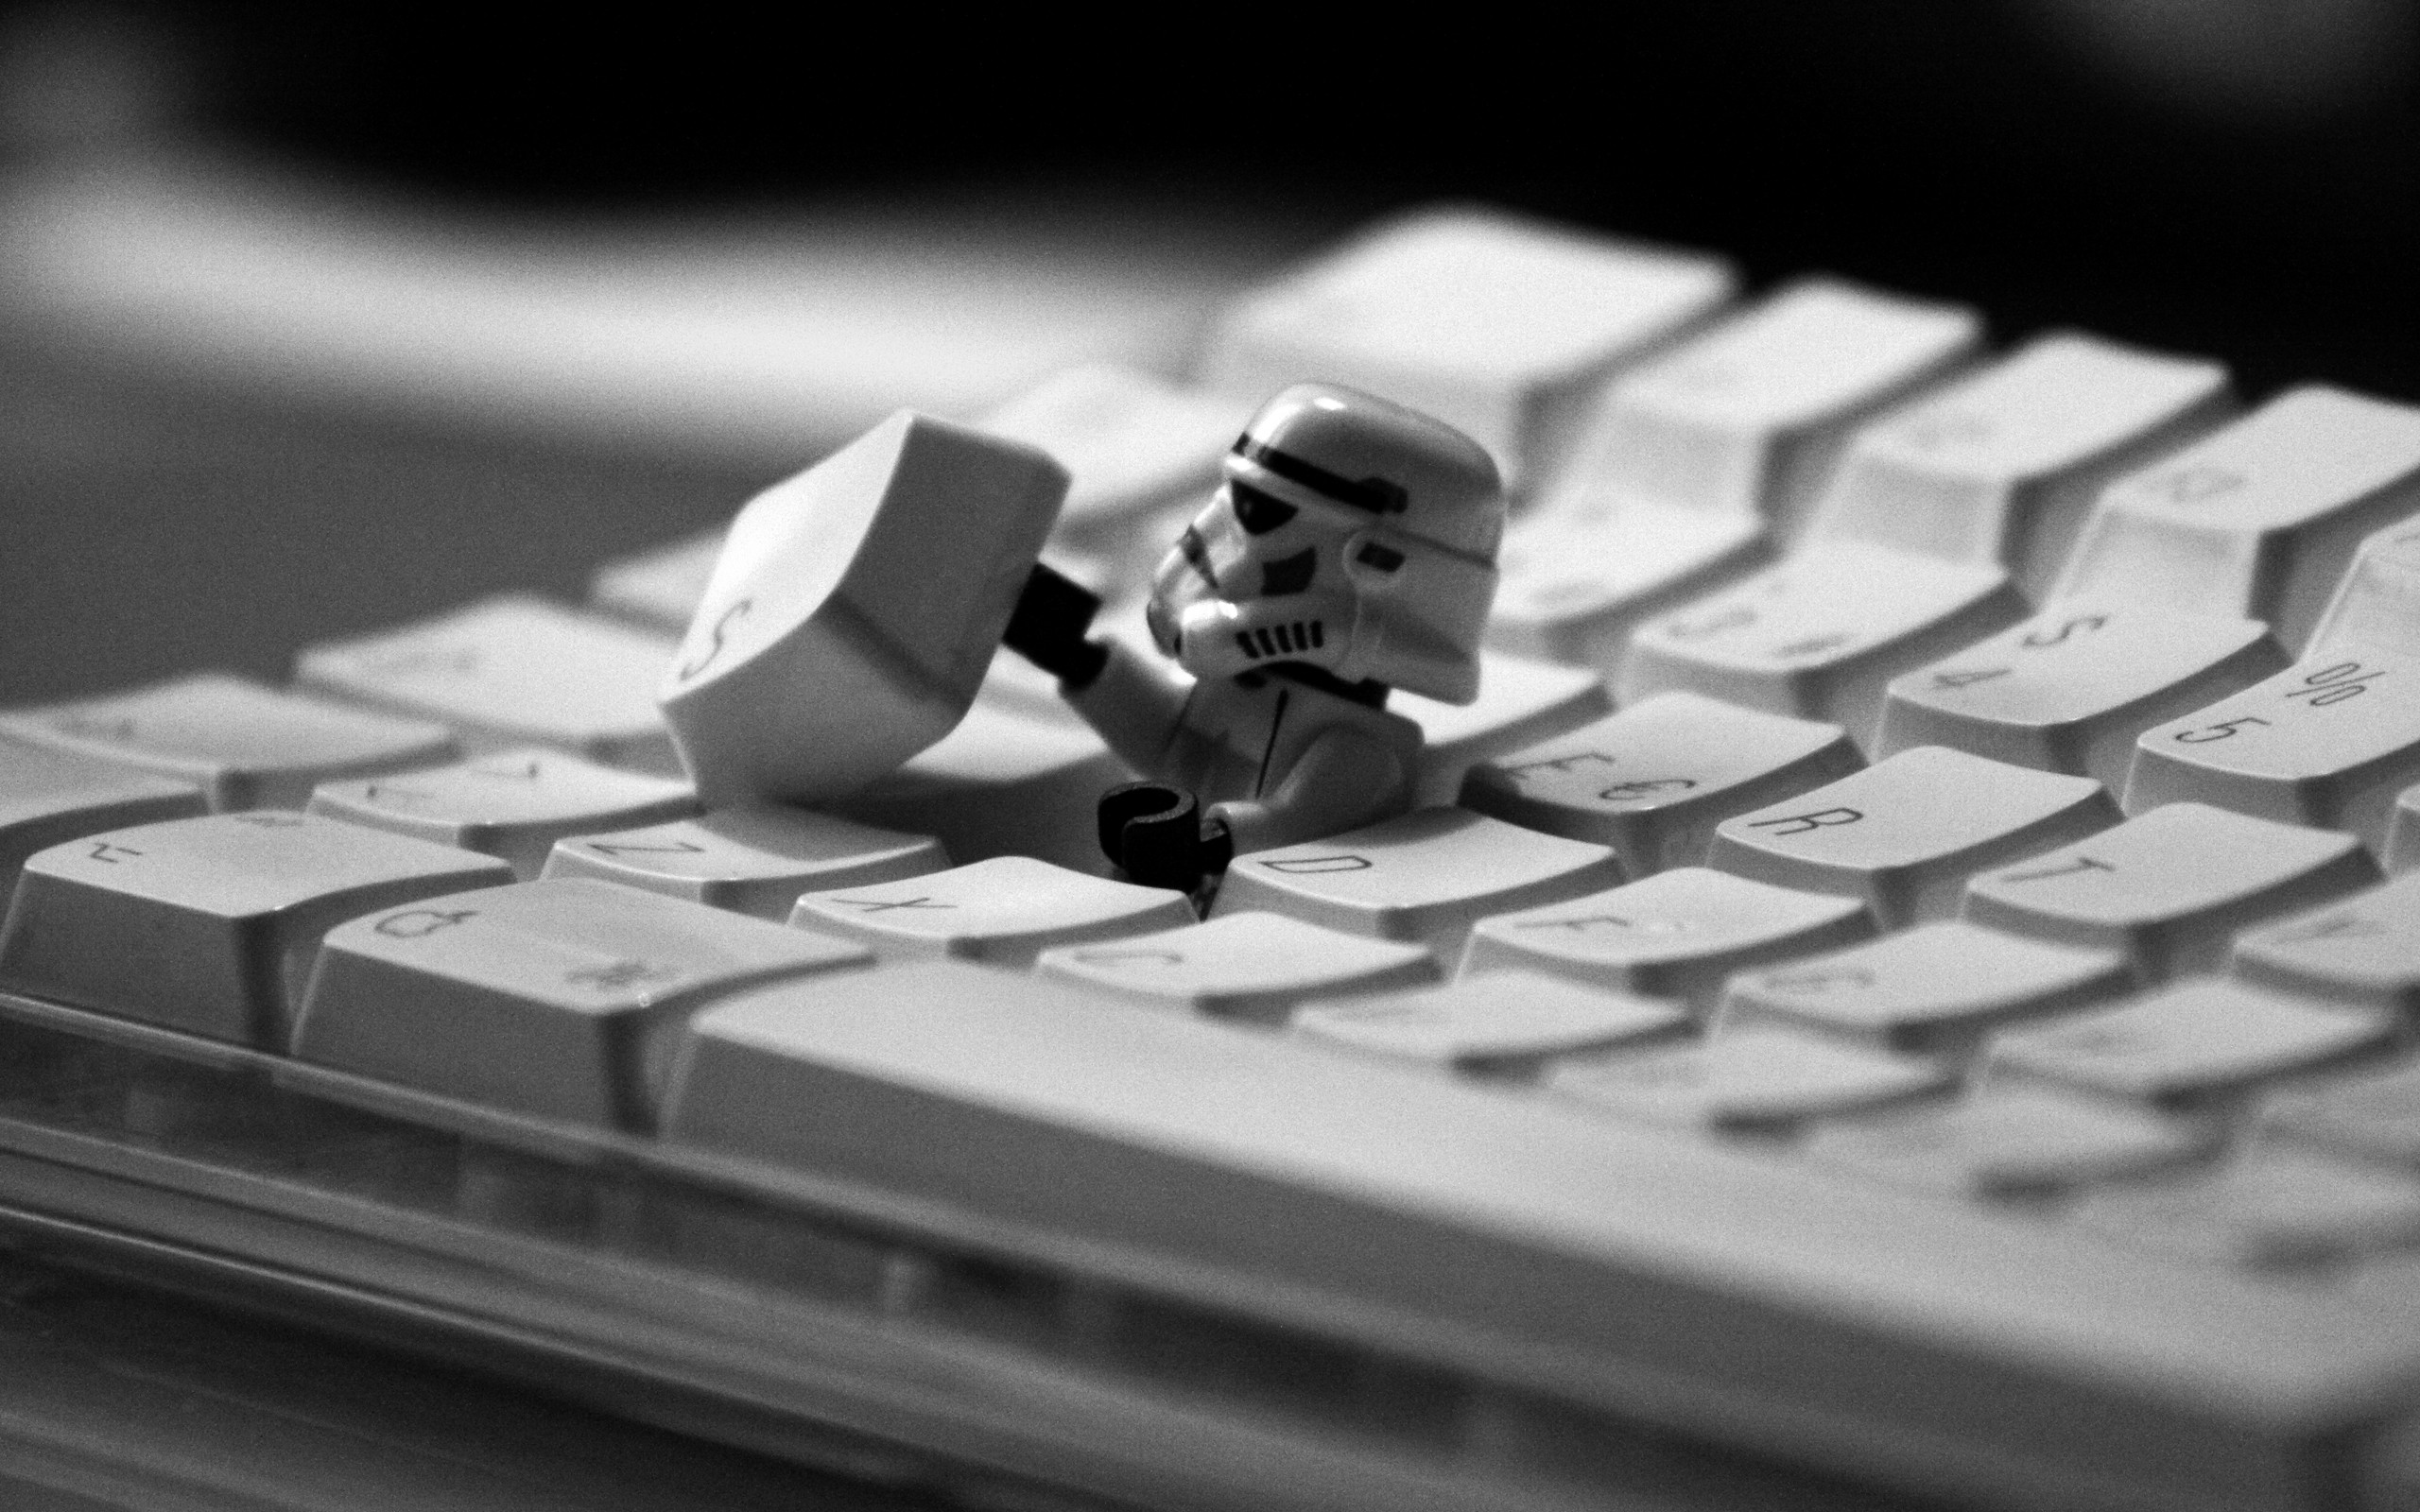 LEGO Keyboards Monochrome Humor Imperial Stormtrooper Star Wars Humor 2560x1600